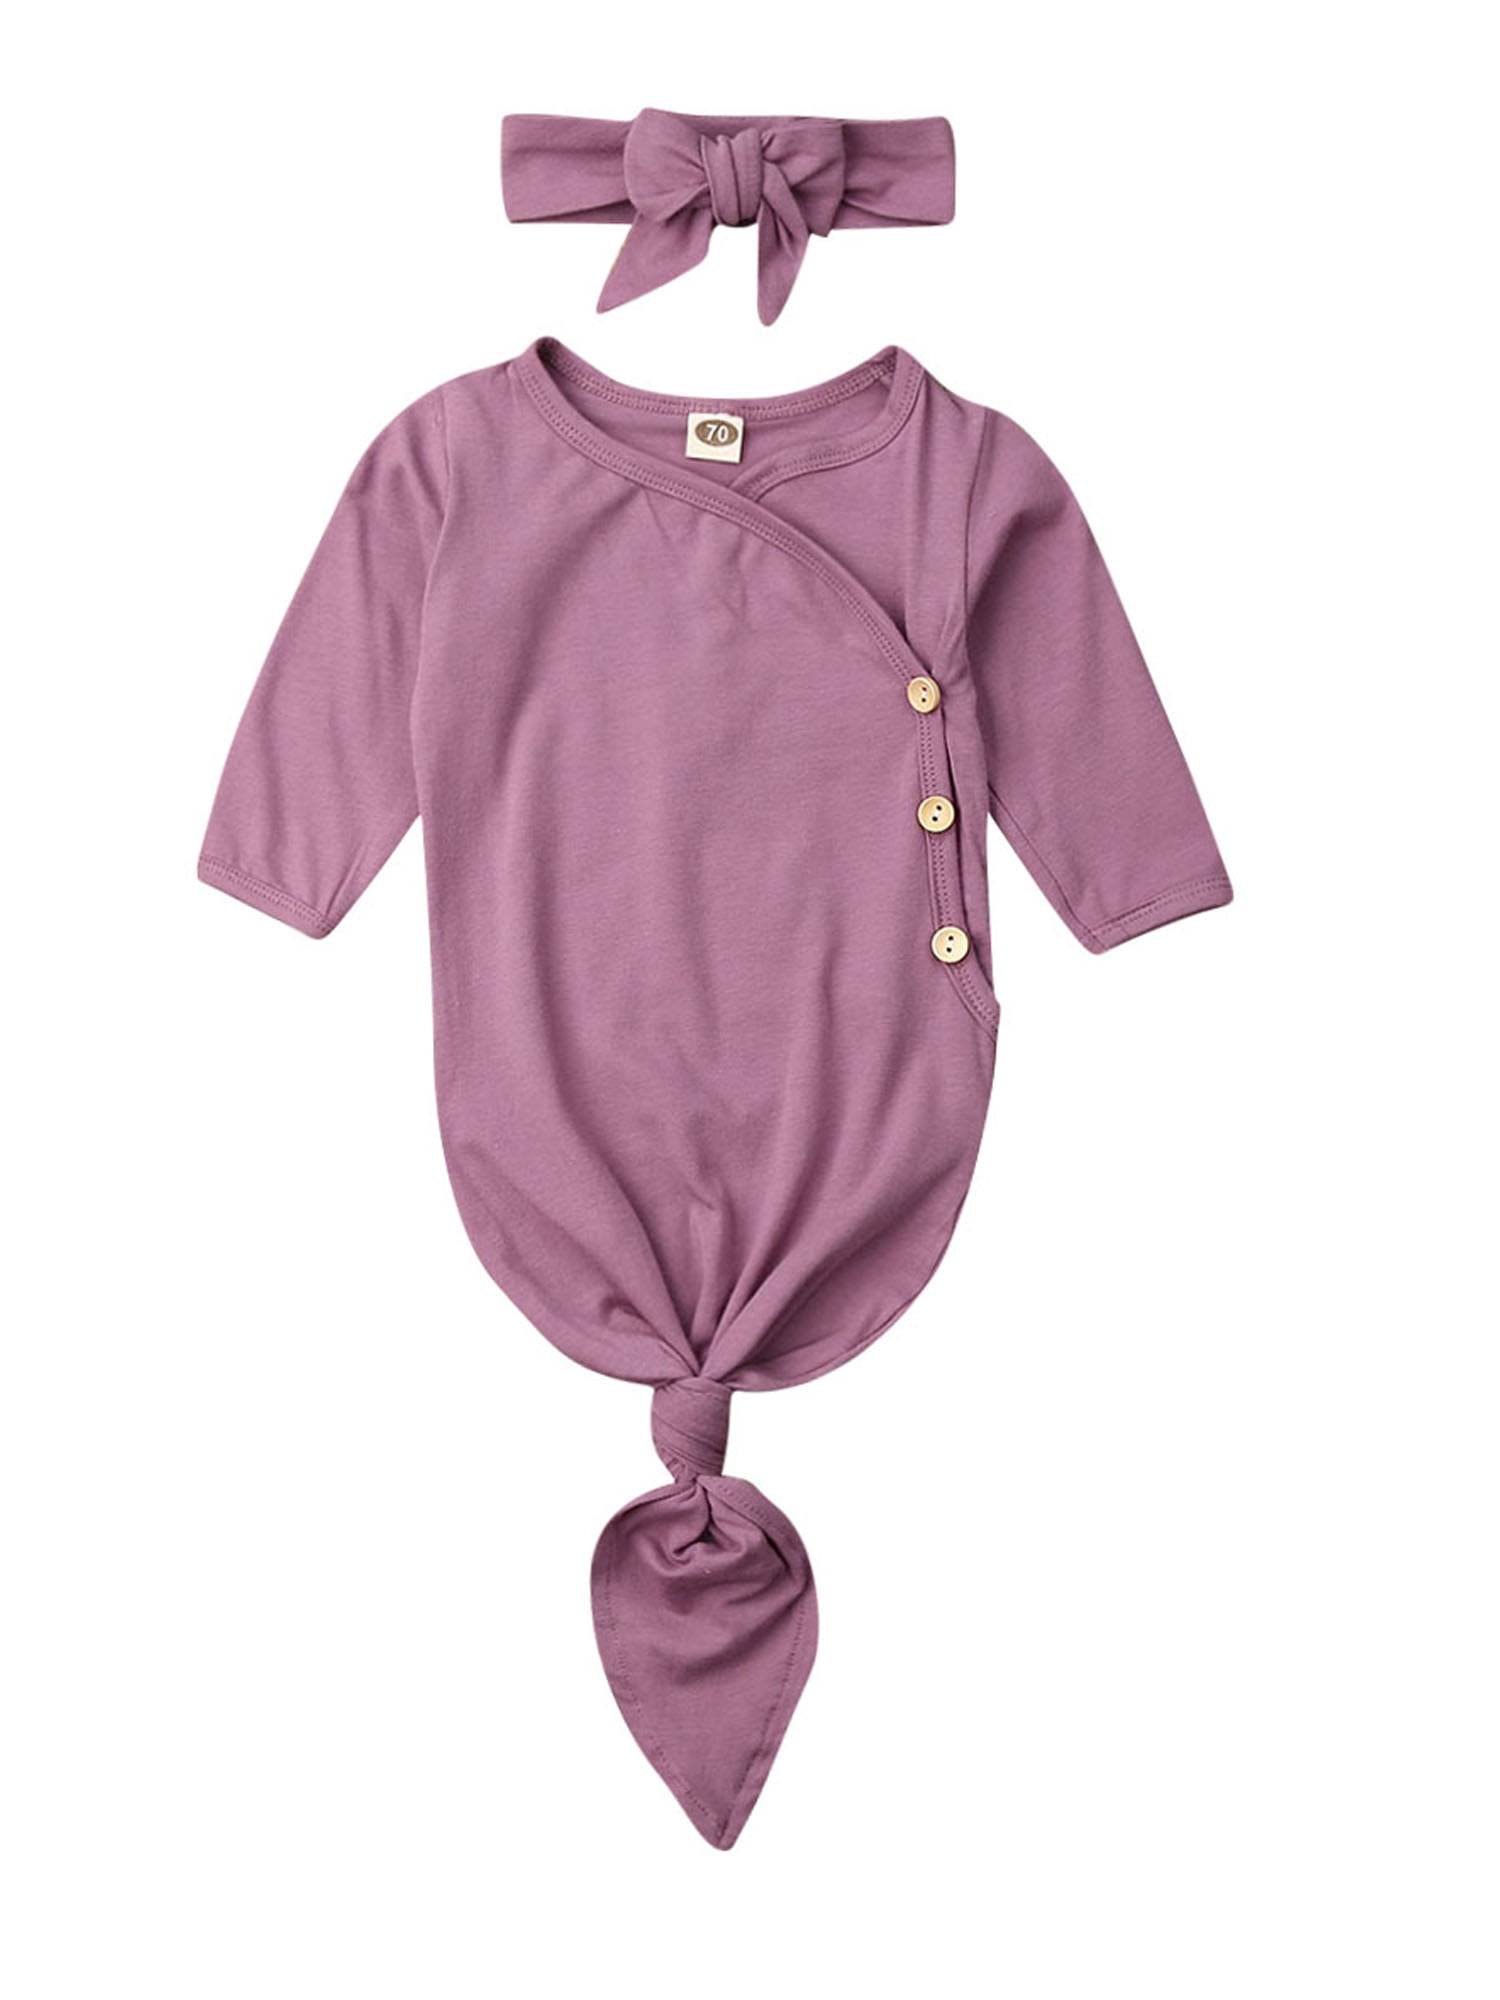 Newborn Baby Girl Boy Cute Long Sleeve Solid Color Sleepwear Romper Sleeping Bag Headwear Autumn Winter Home Outfit 0-3 Months, Purple